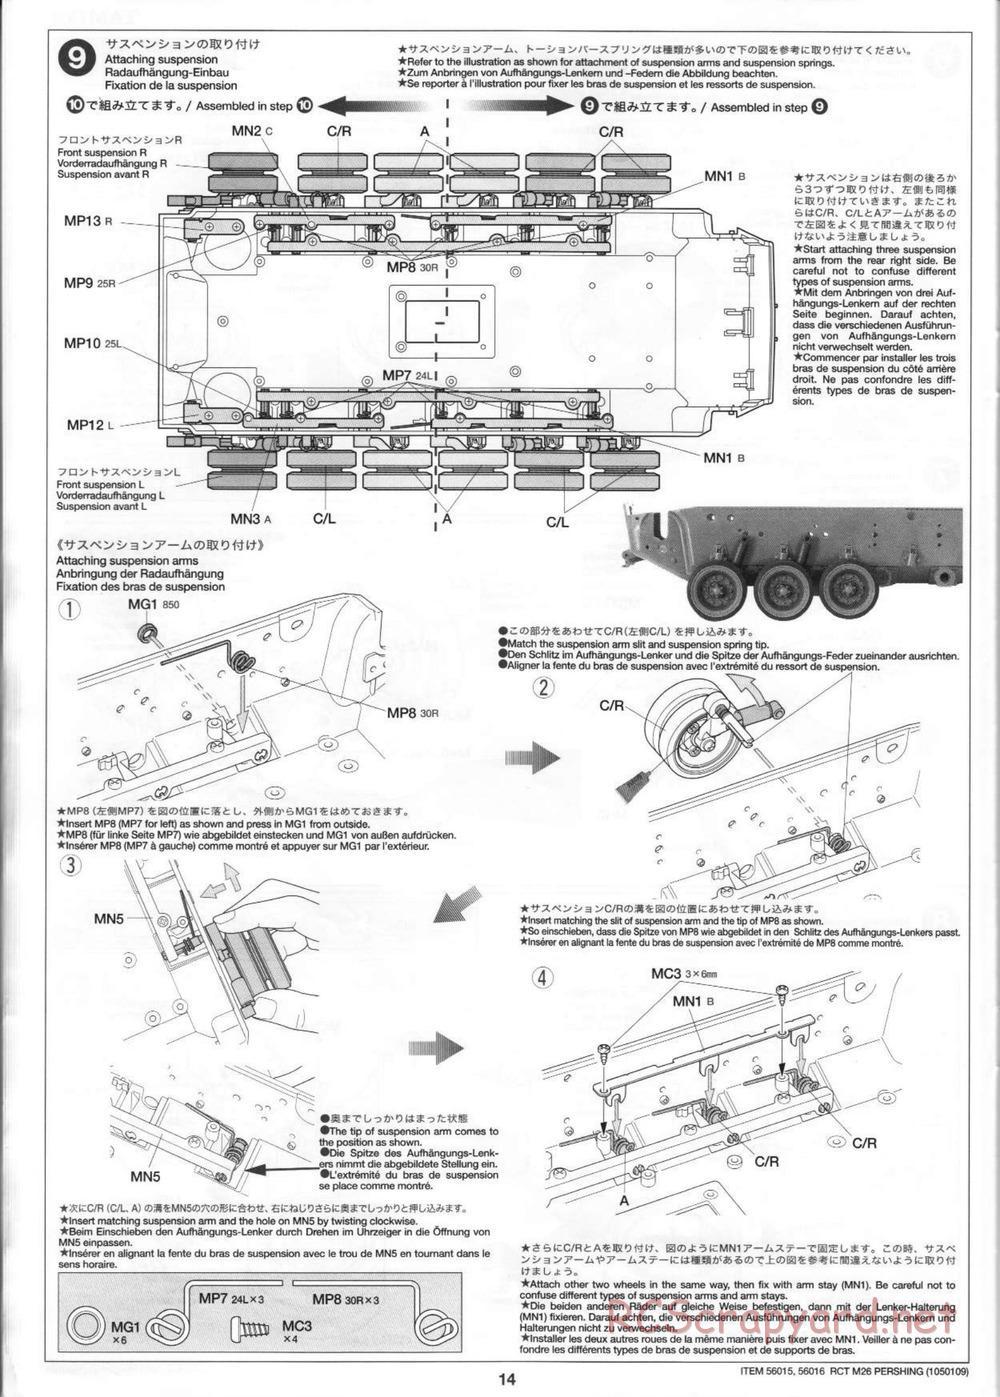 Tamiya - M26 Pershing - 1/16 Scale Chassis - Manual - Page 14